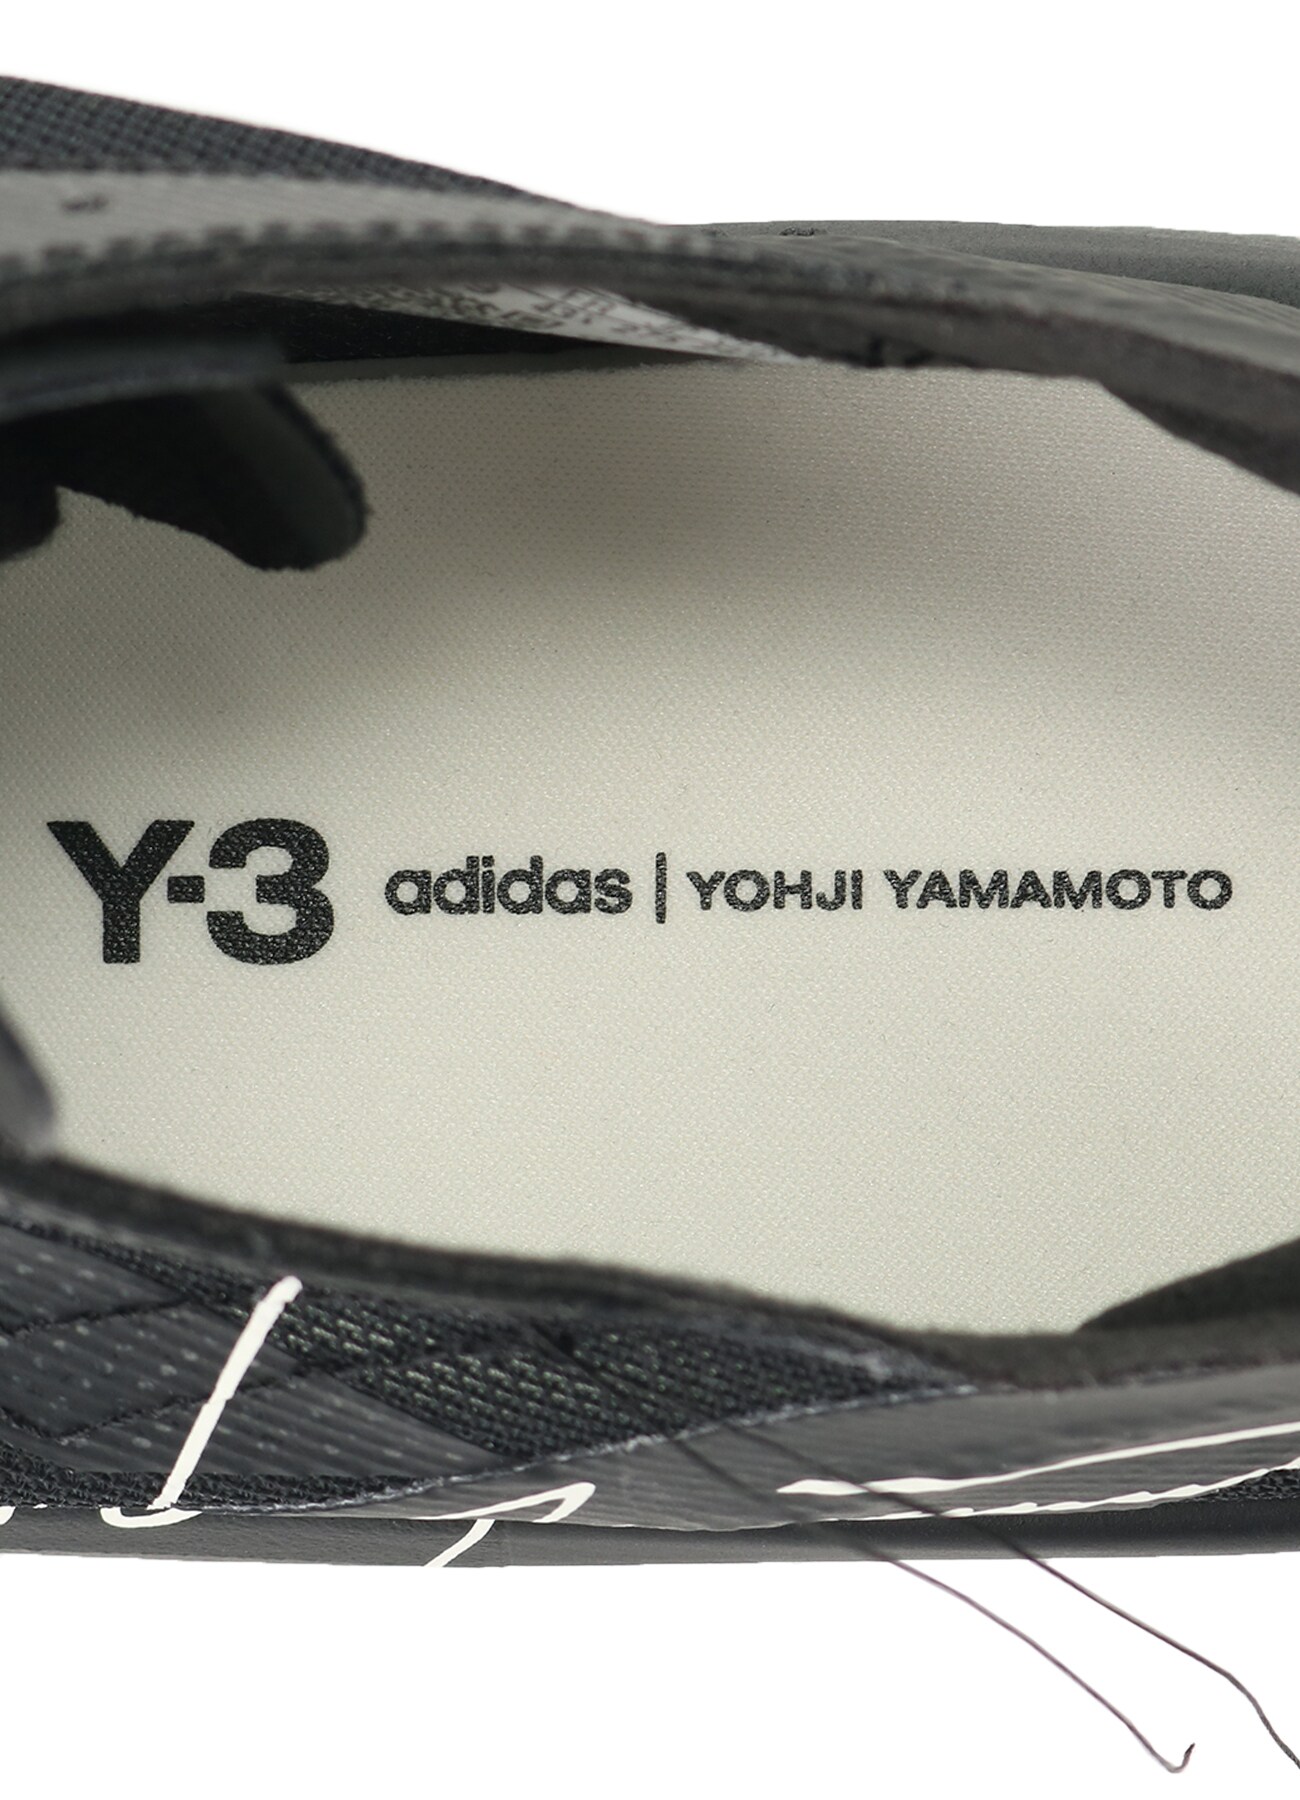 Y-3 TAKUMI SEN 9(26.5cm BLACK): Y-3｜WILDSIDE YOHJI YAMAMOTO 